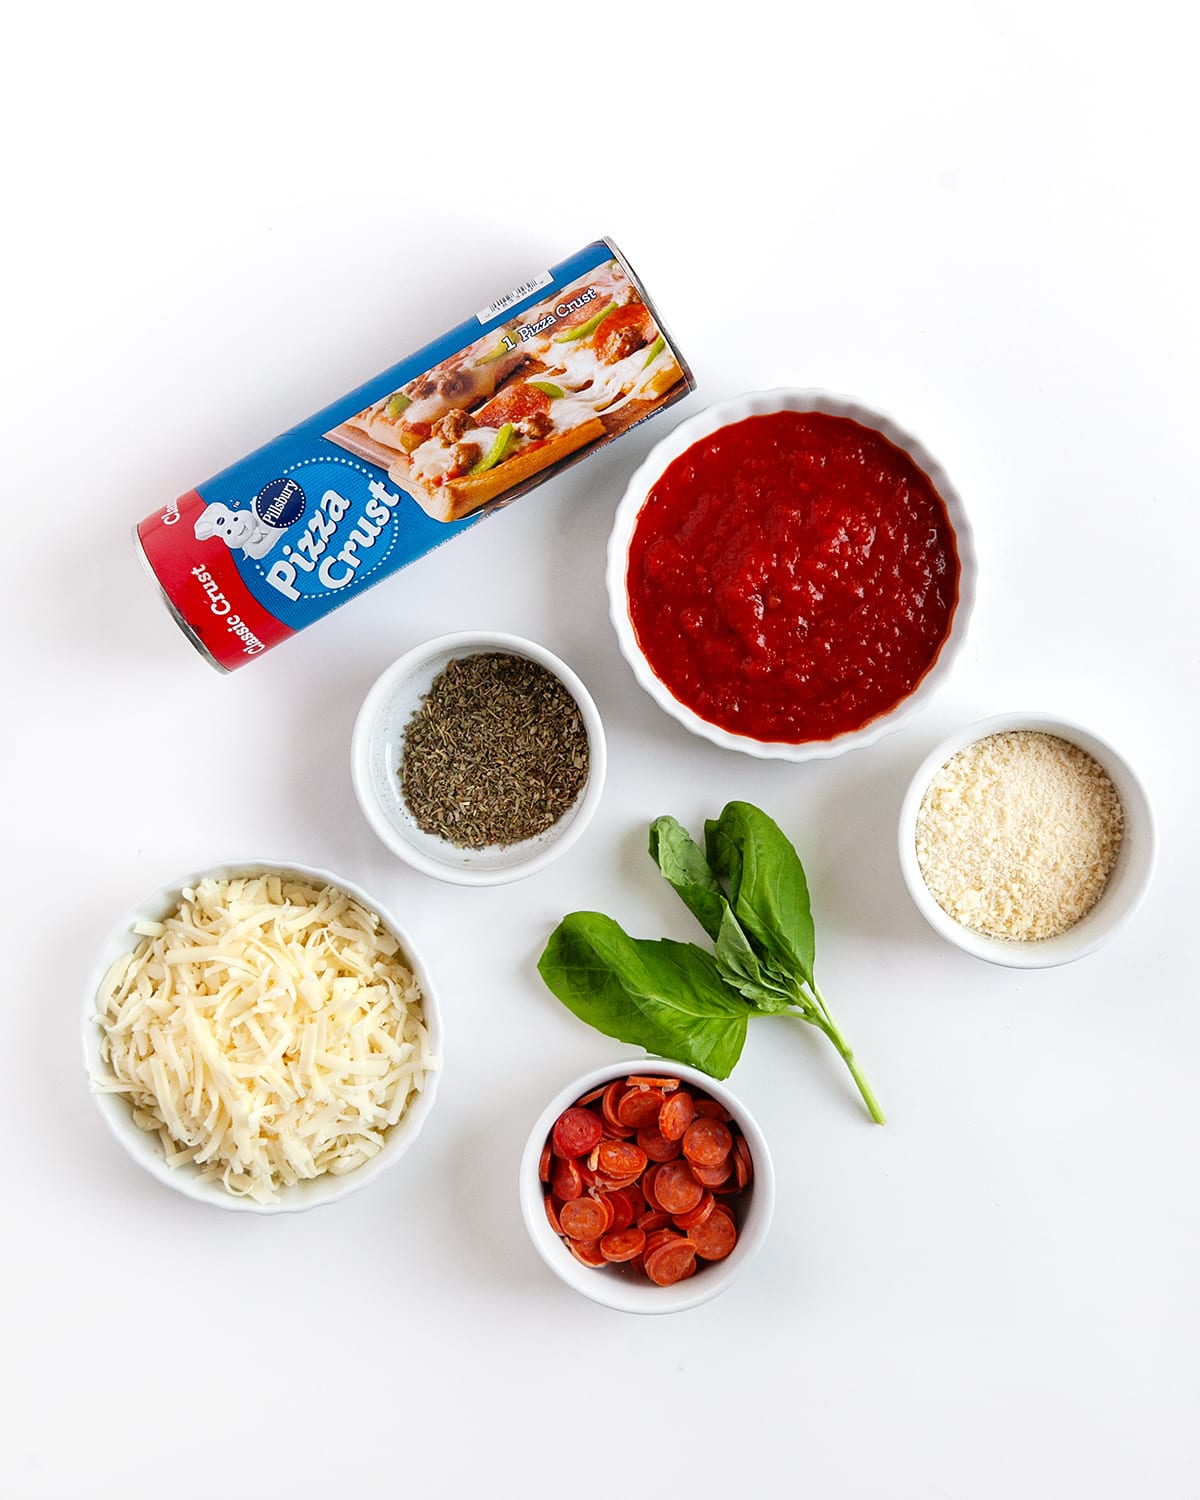 Ingredients for panzerotti. 